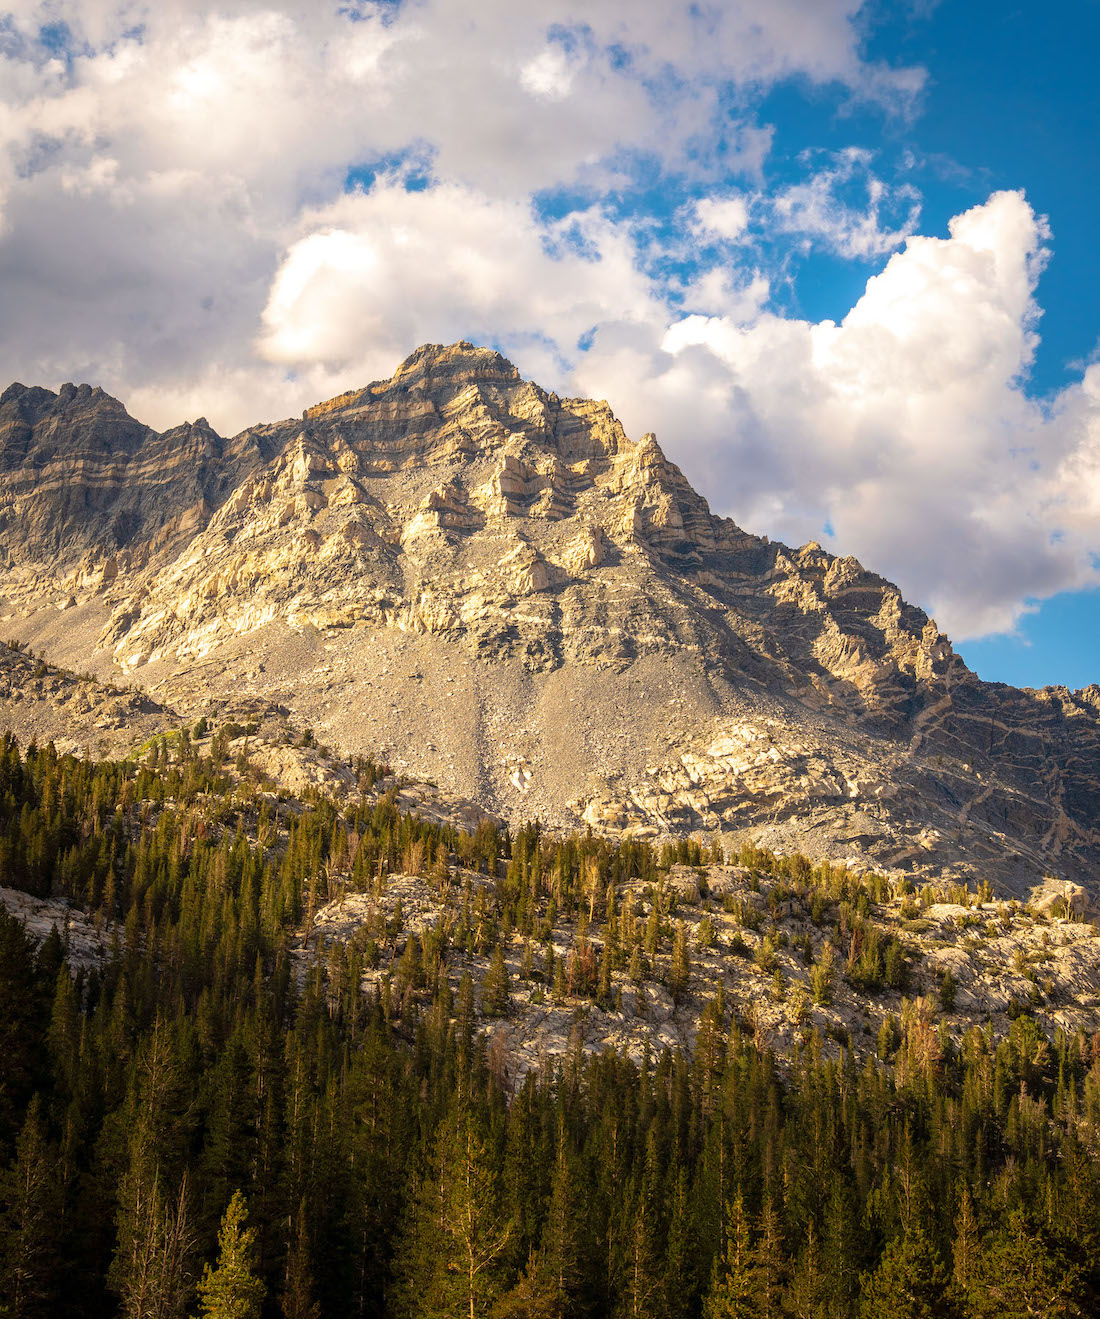 A beautiful mountain in the Sierras